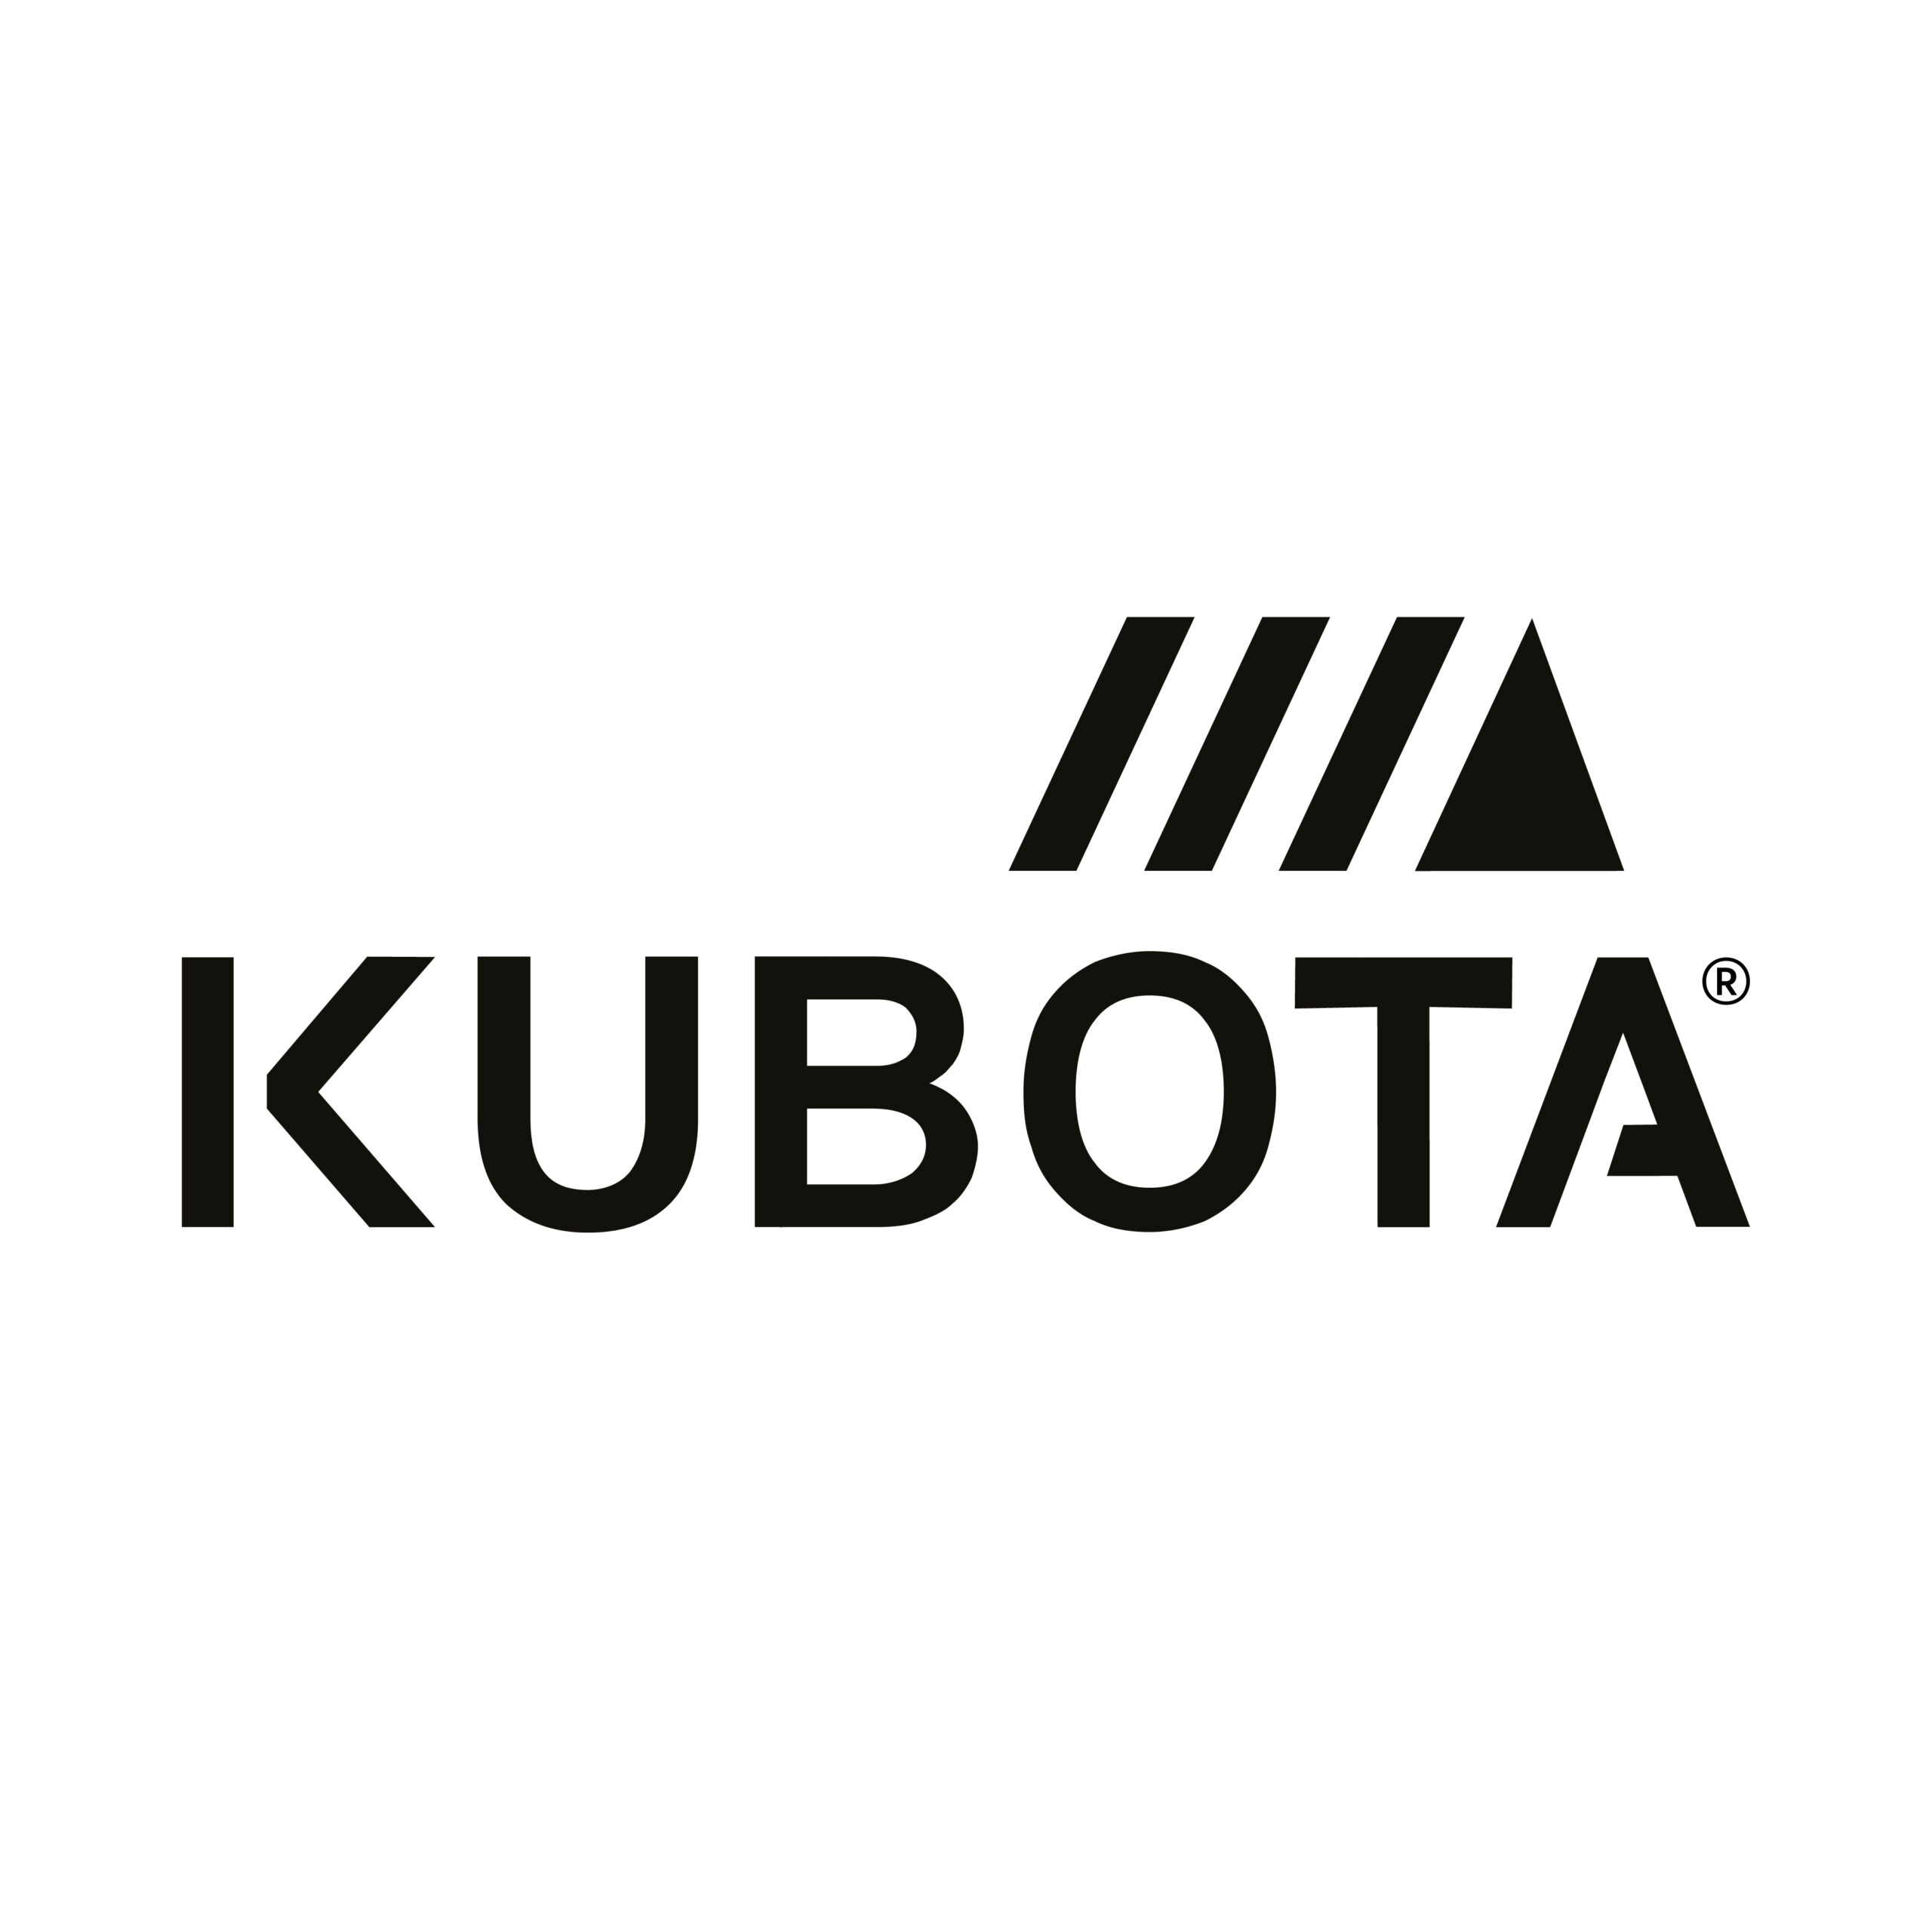 Logo_Kubota_Registered_black_on_white_4000x4000